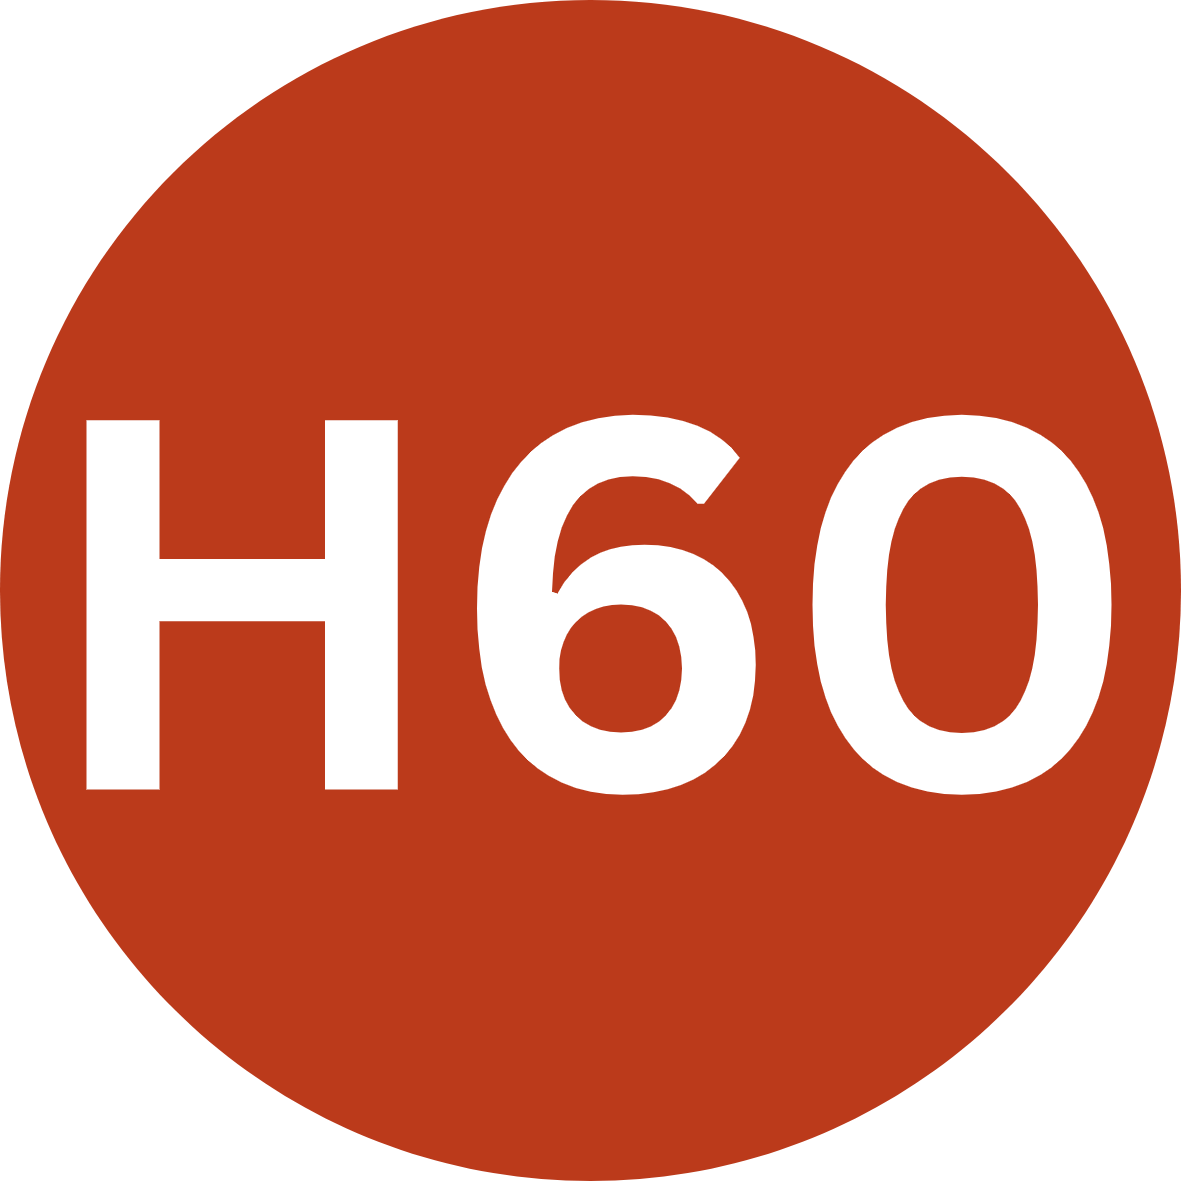 h60